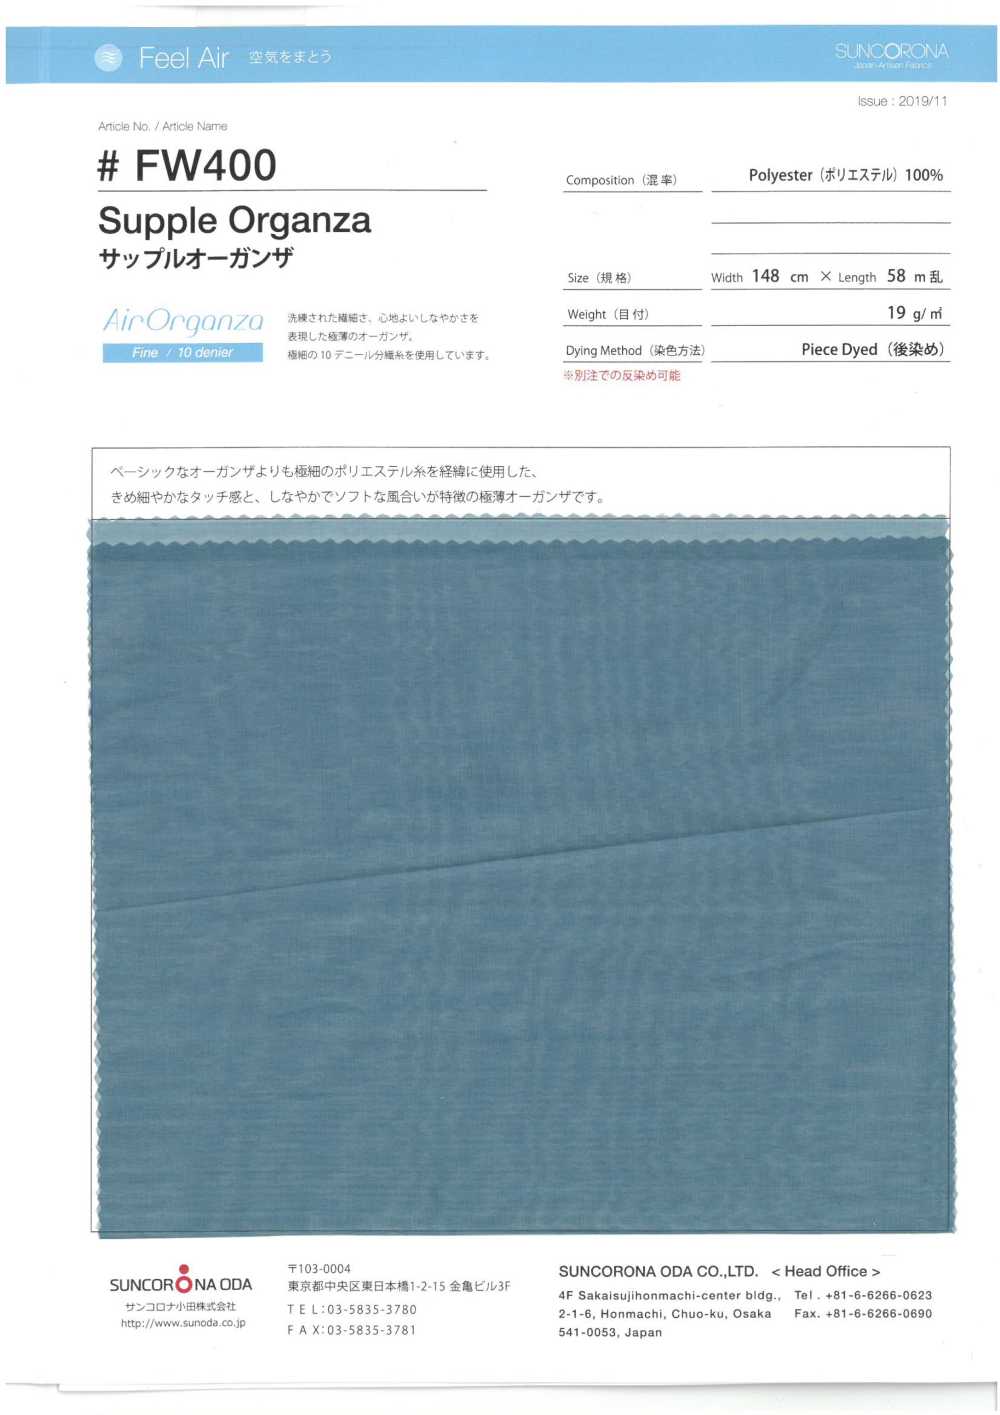 FW400 Sapple-Organza[Textilgewebe] Suncorona Oda